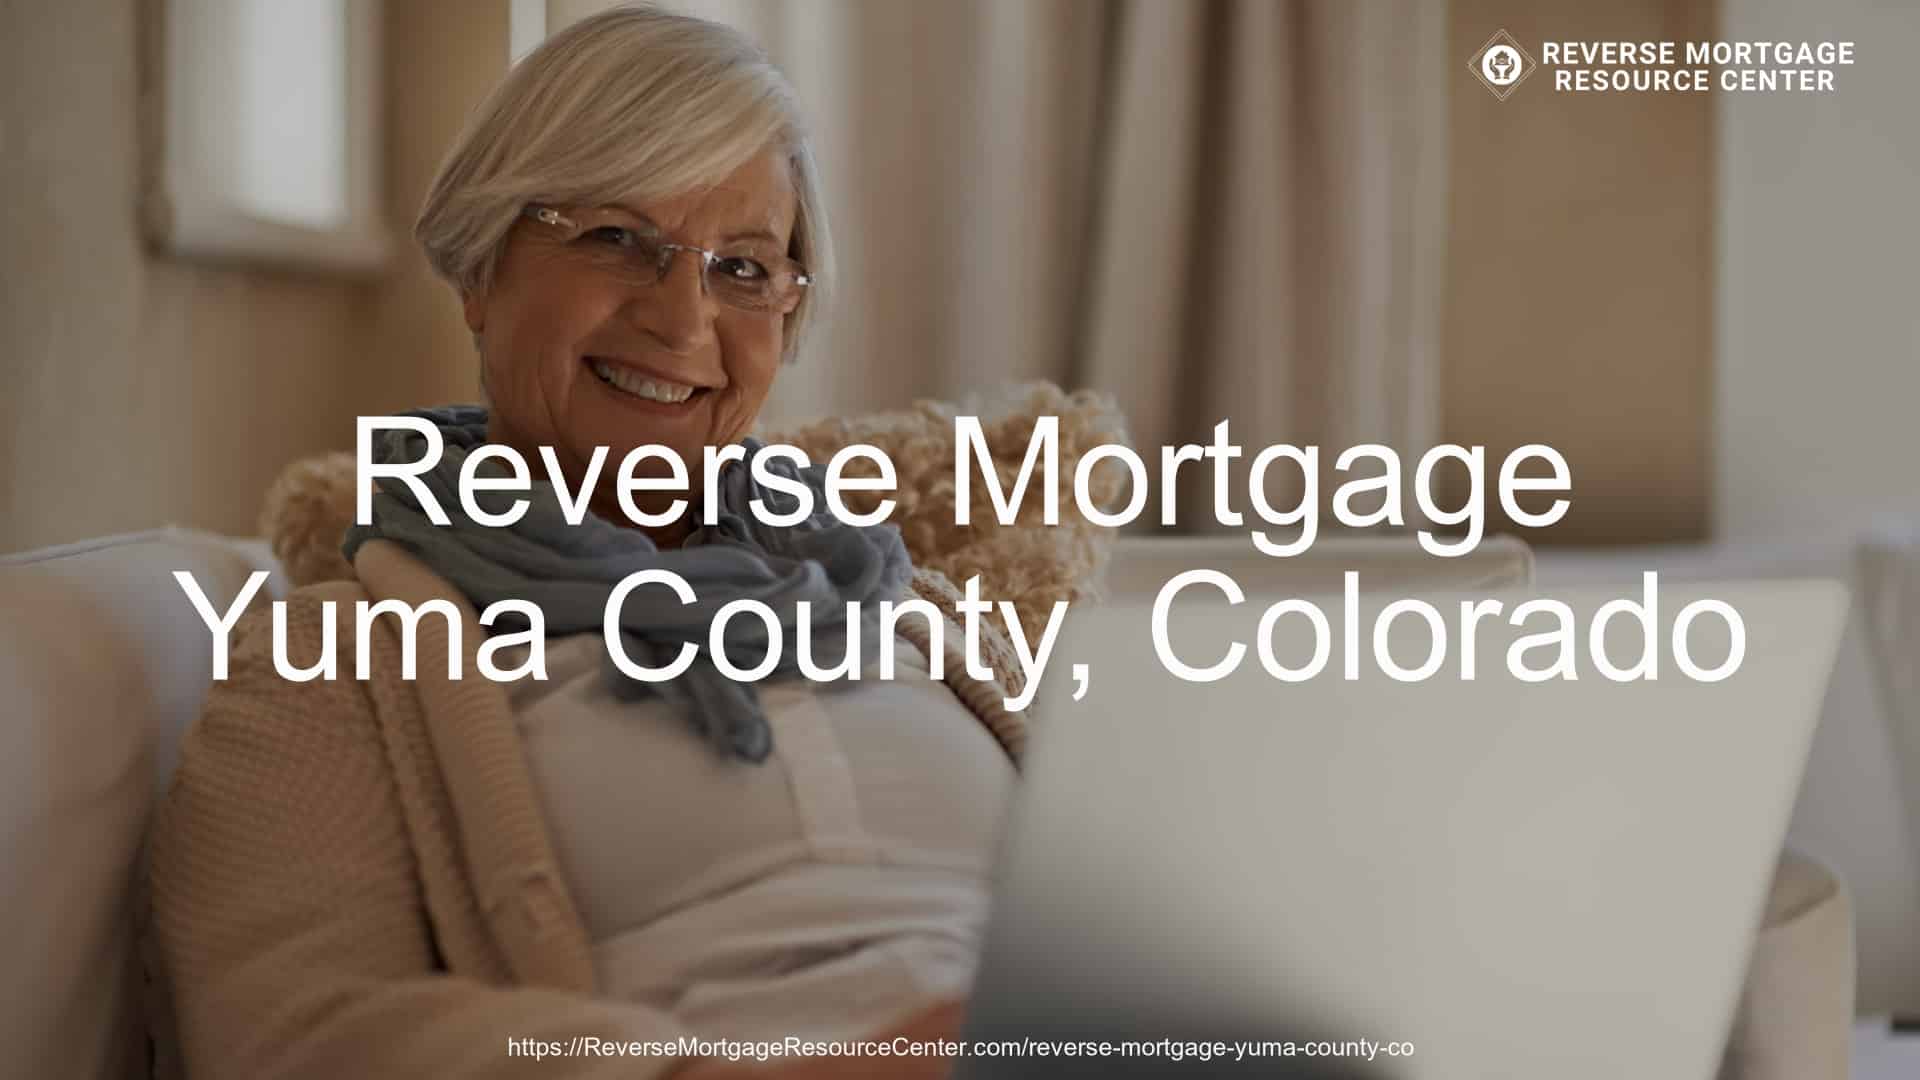 Reverse Mortgage Loans in Yuma County Colorado